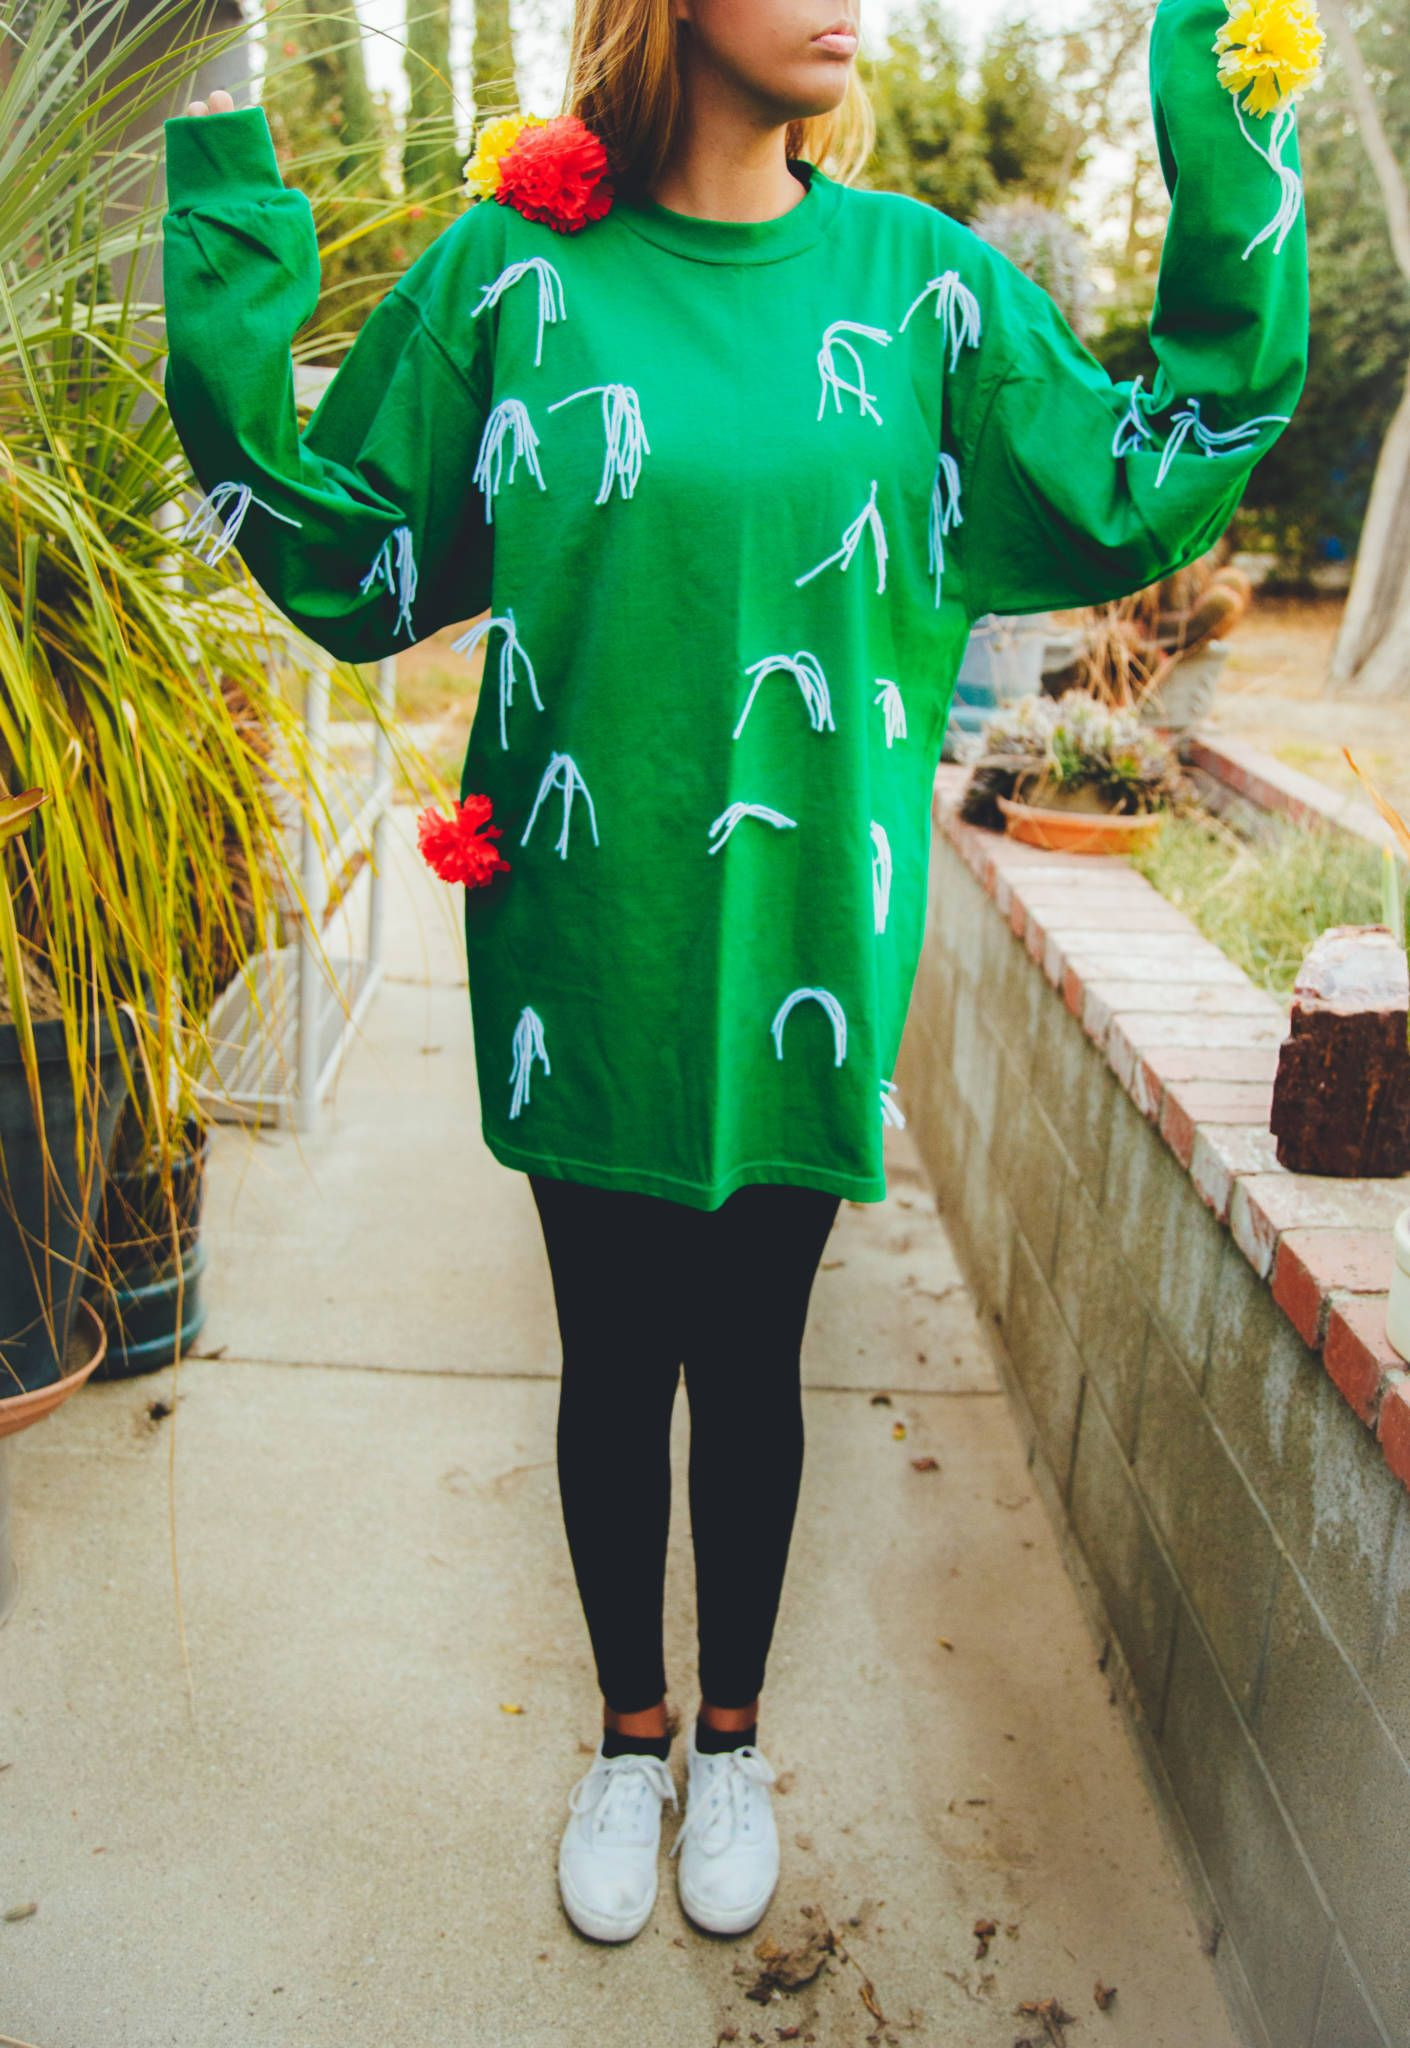 Cactus Costume DIY
 Get inspired this Halloween with a fun Cactus costume DIY